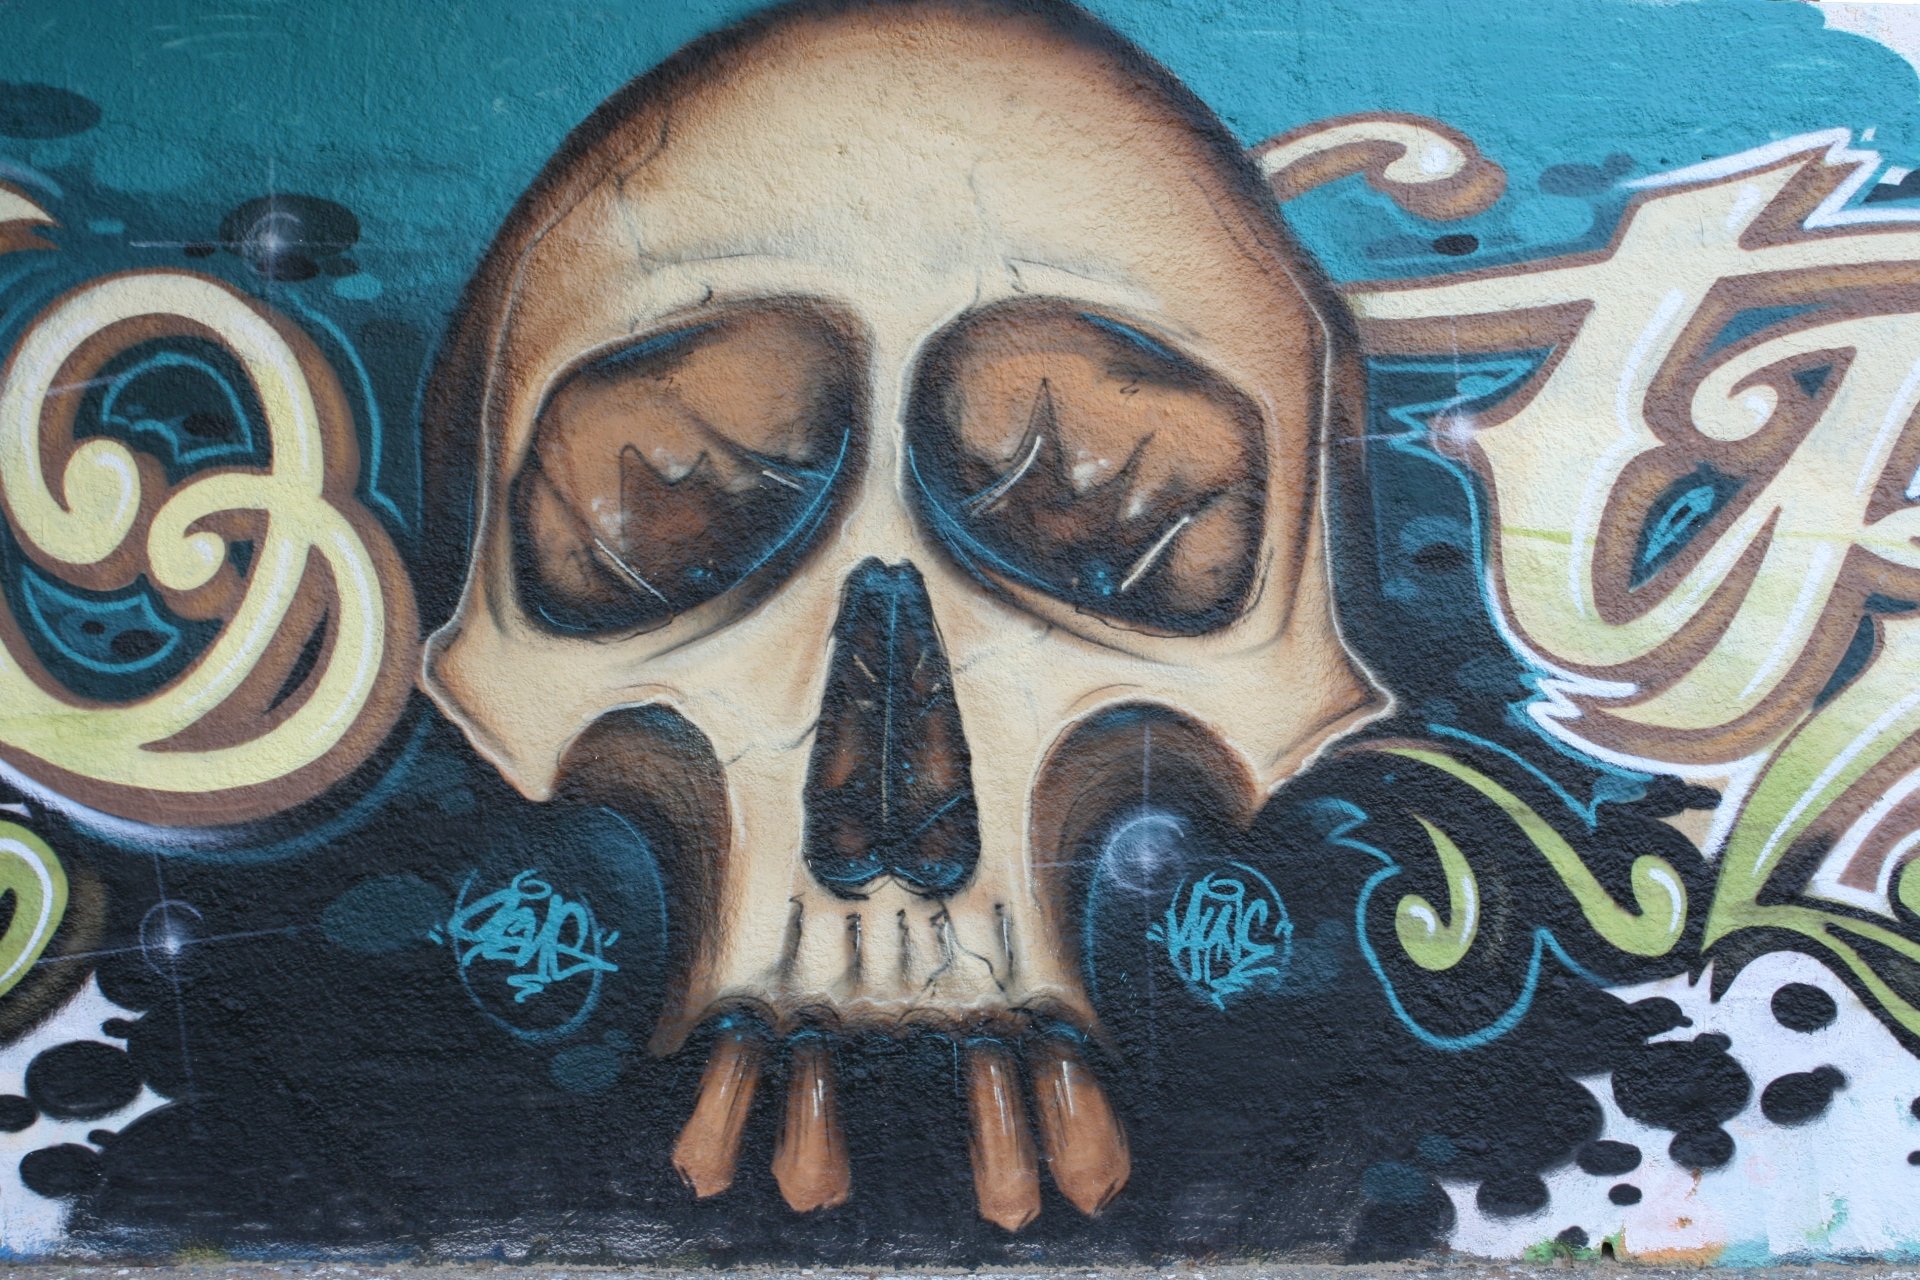  Skull  Graffiti  4k Ultra HD  Wallpaper  Background Image 